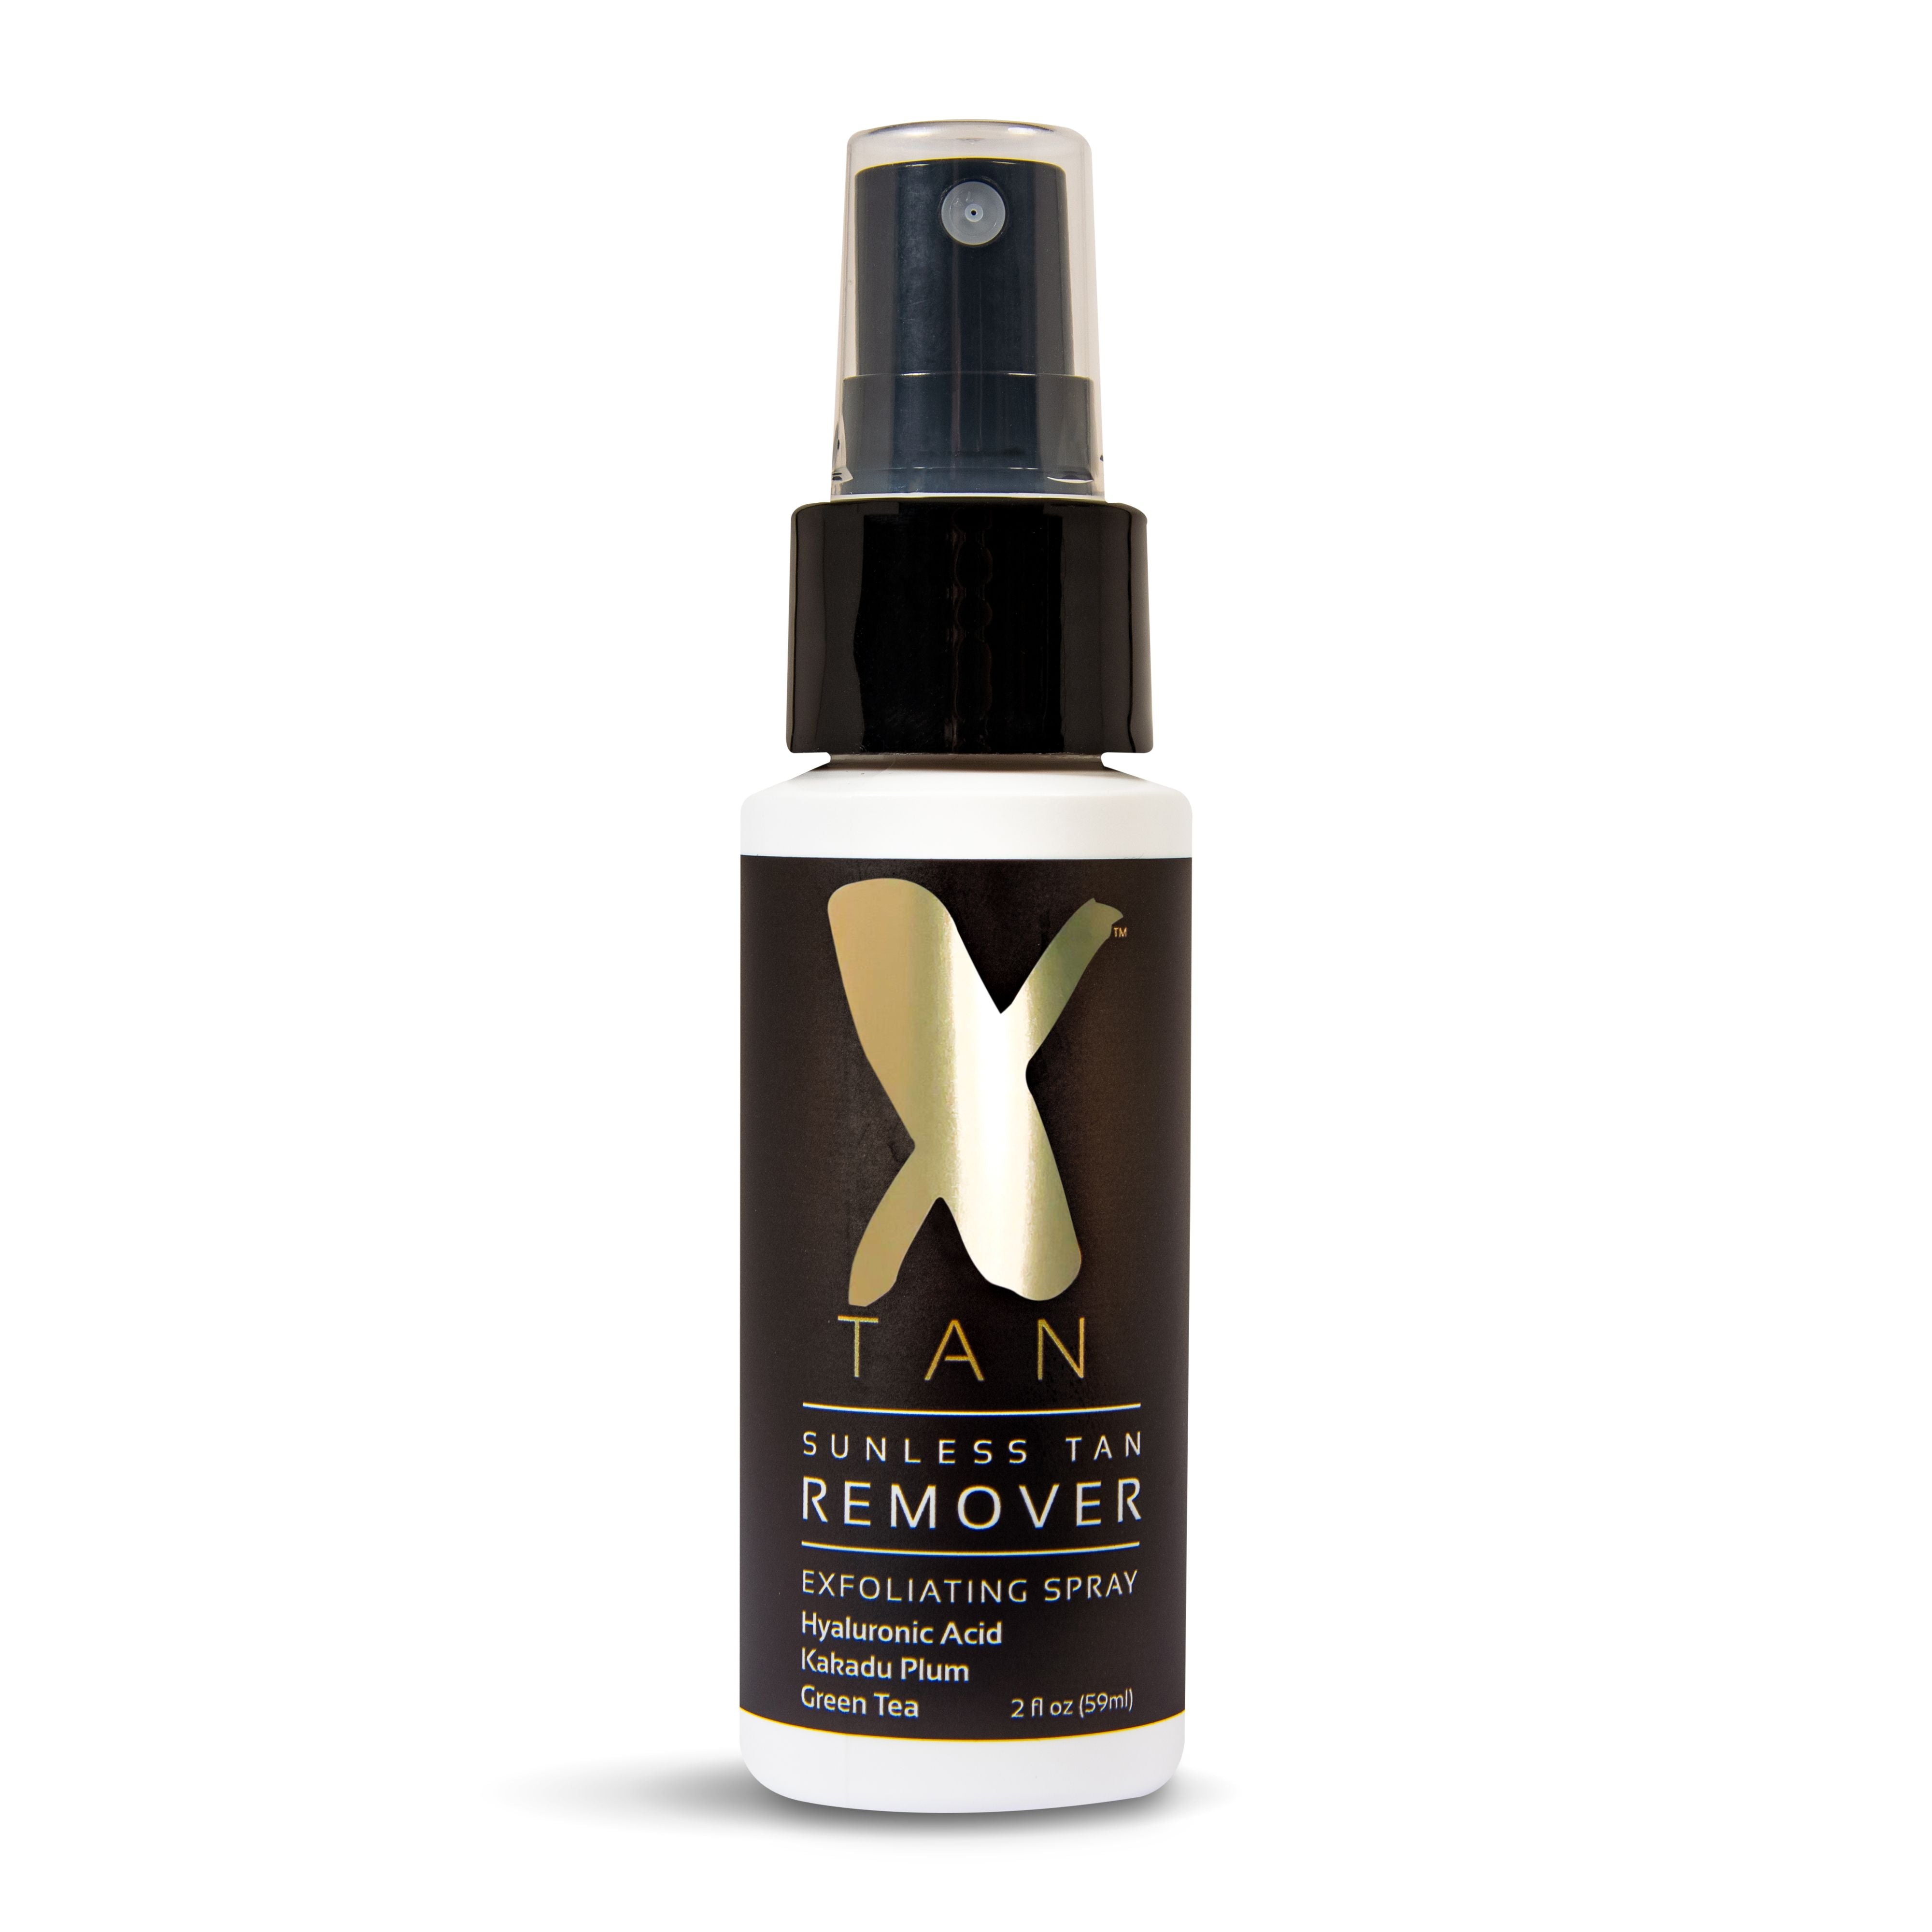 X-TAN Sunless Tan Remover Exfoliating Spray